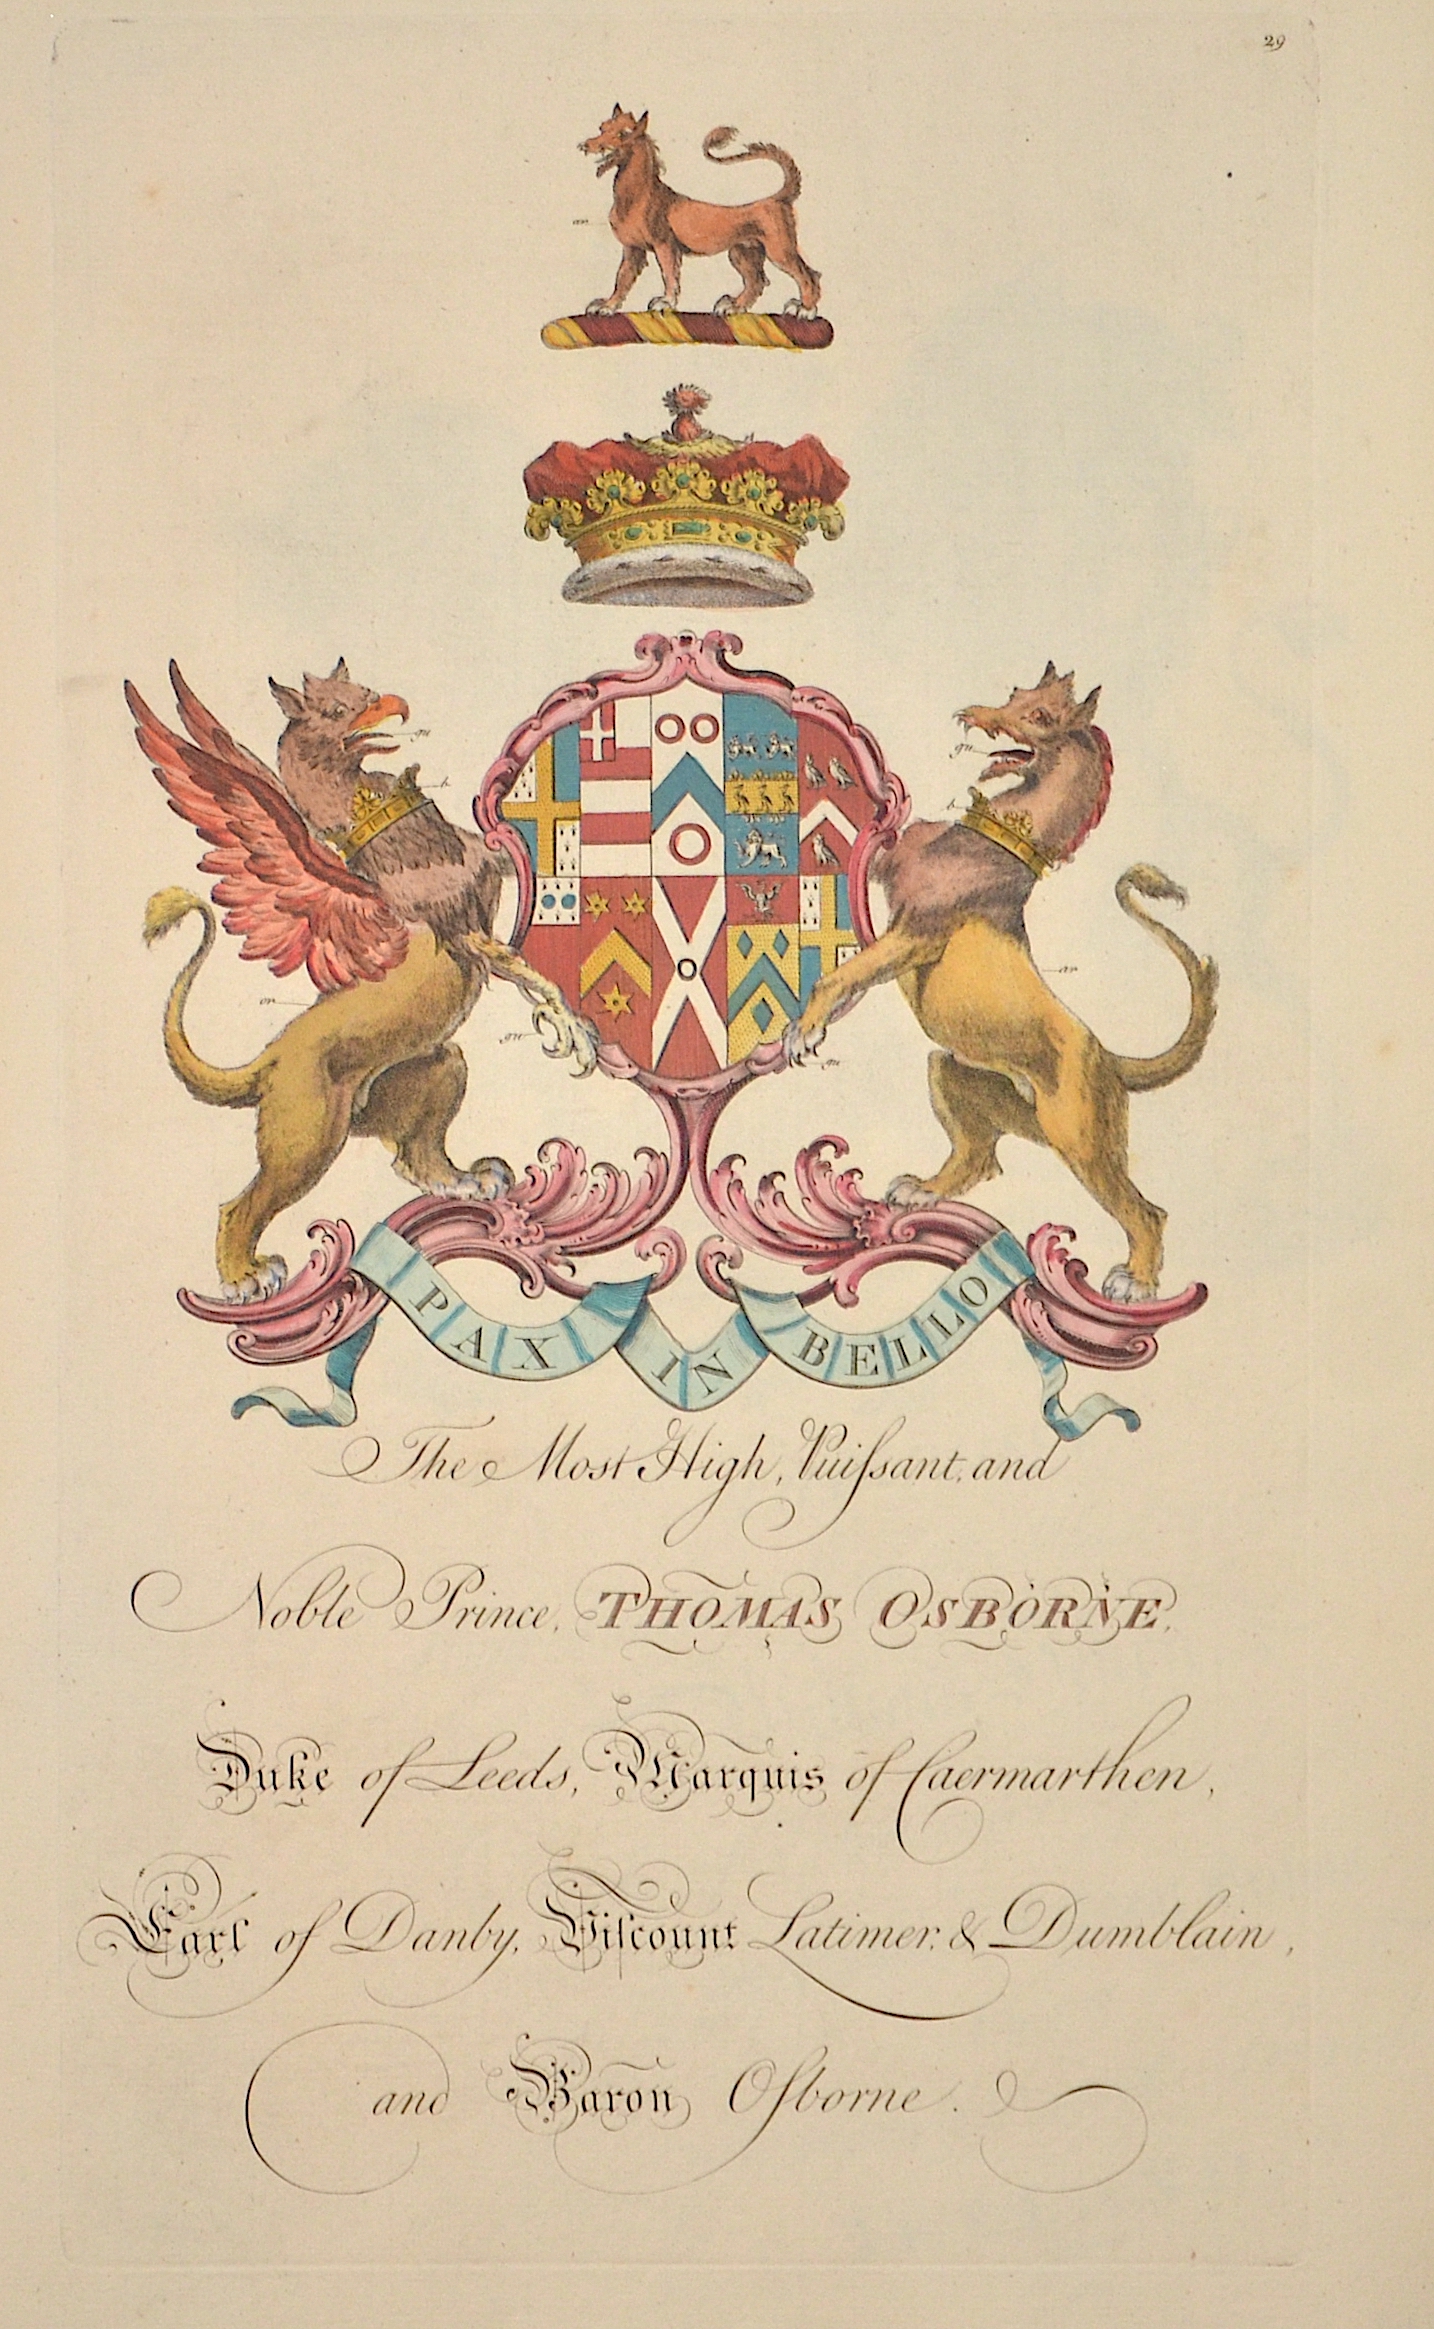 Edmondson  The Most High, Vuissant, and Noble Prince, Thomas Osborne, Duke of Leeds, Marquis of Caermarthen, Earl of Danby, Viscount Latimer, u. Dublain,..